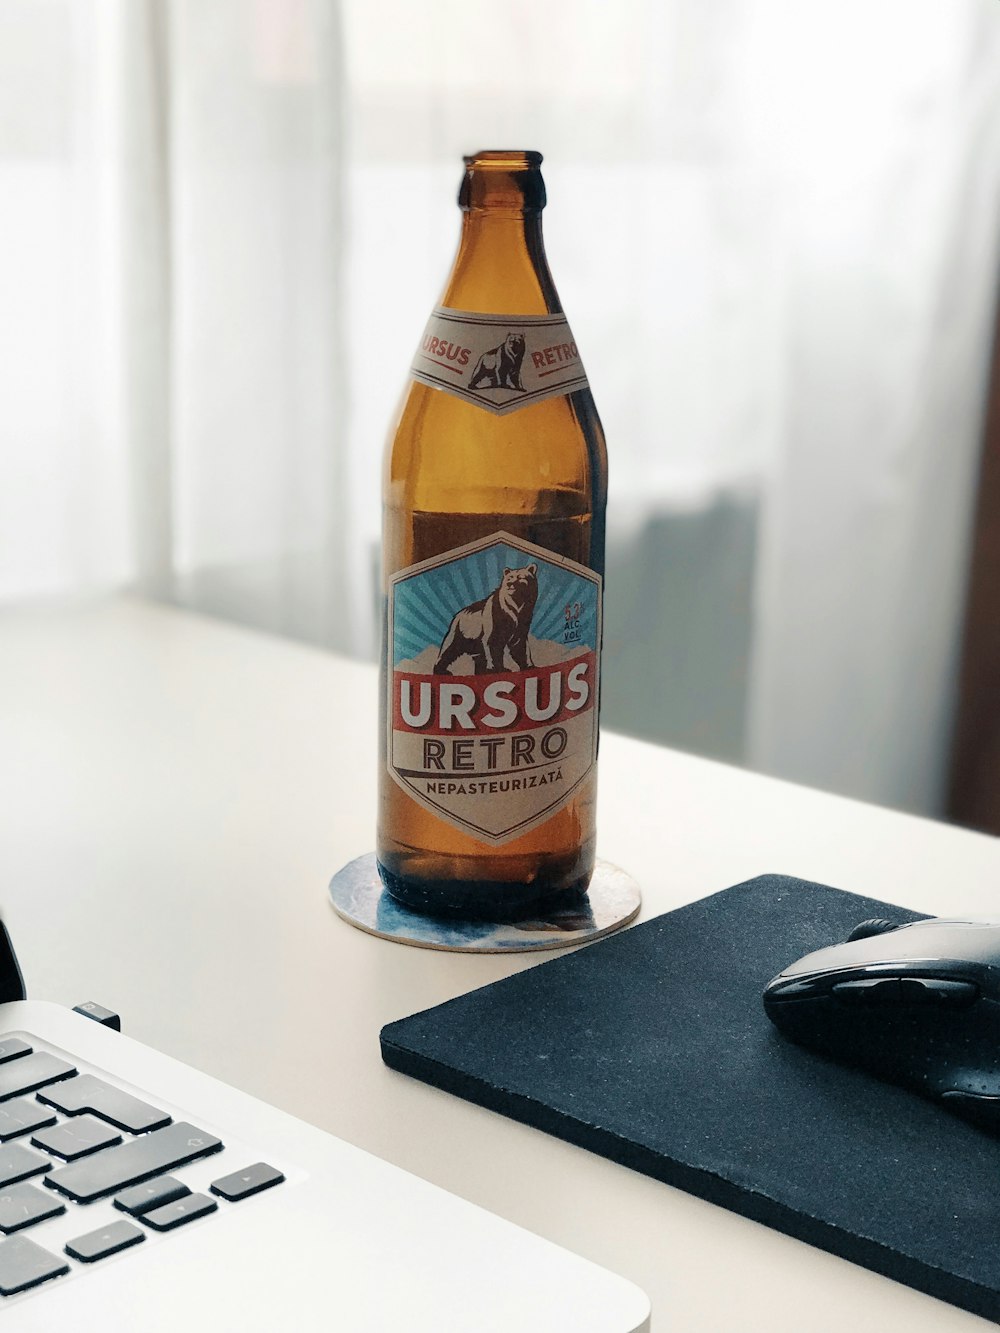 Ursus Retro bottle photo – Free Beer Image on Unsplash